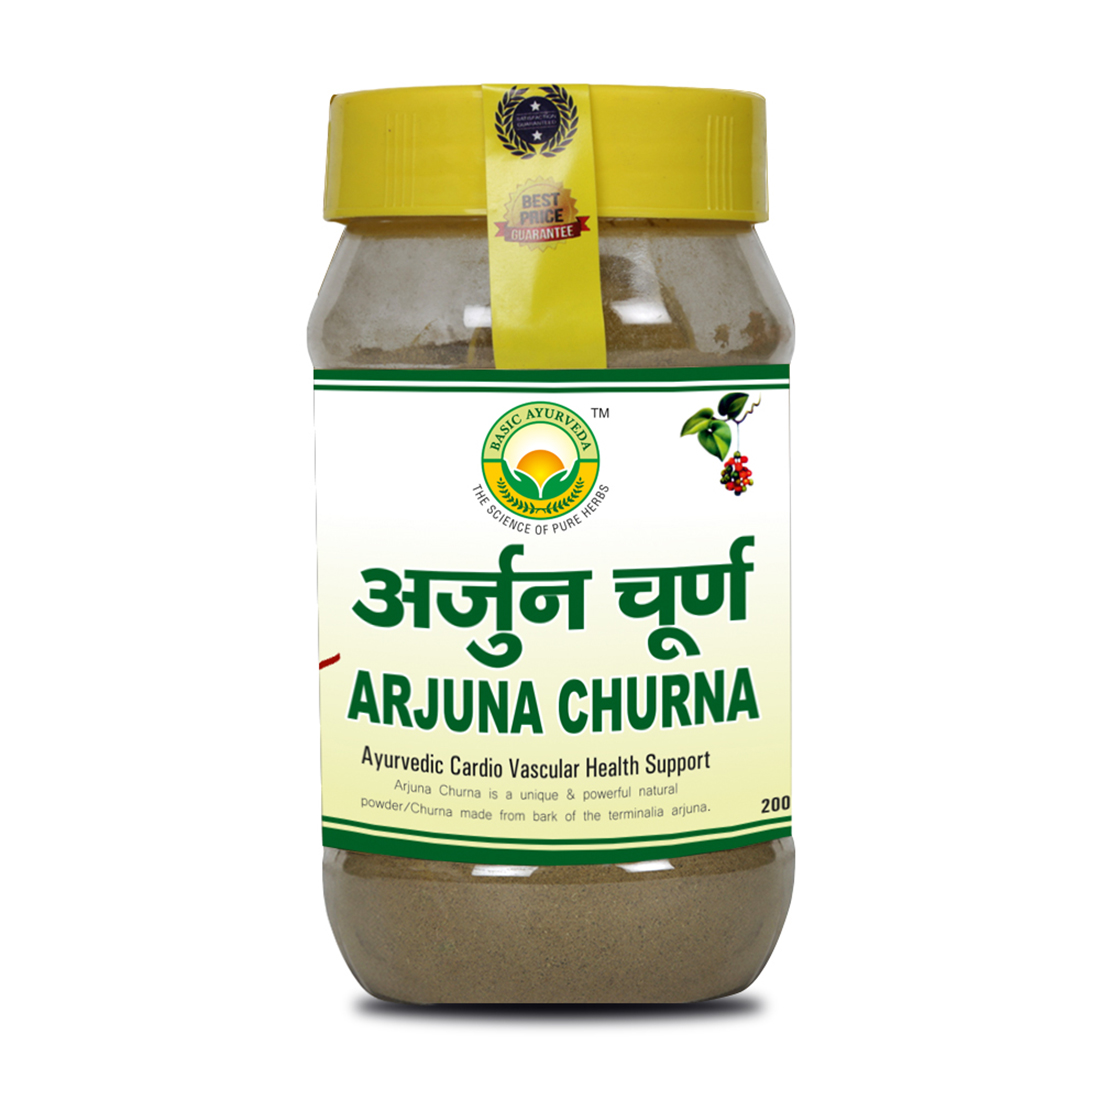 Arjuna Churna